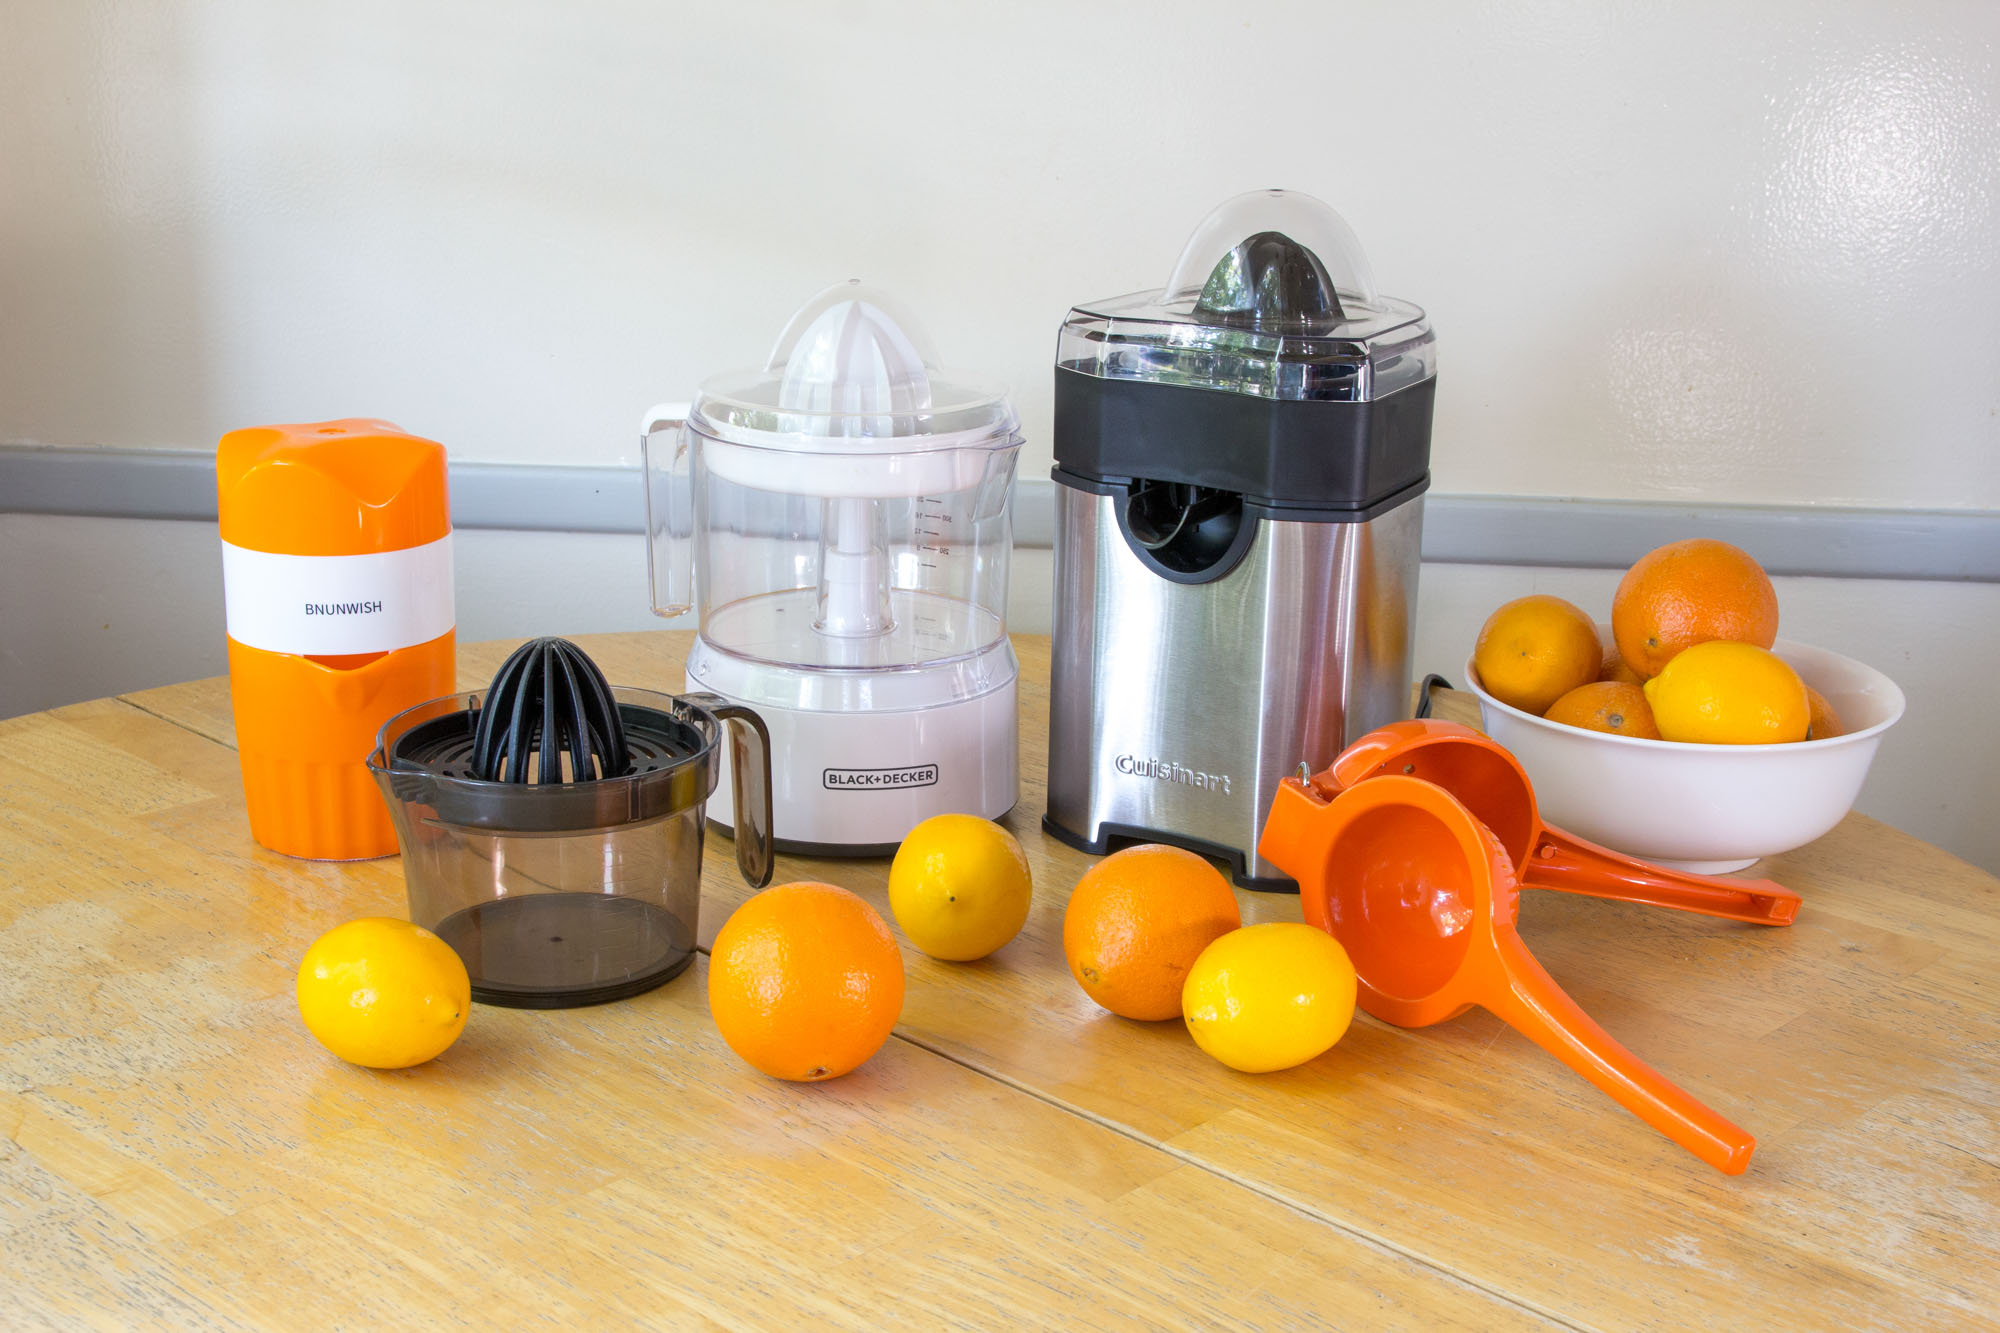 Black&decker Juicer for Oranges Citrus to Pressure 30w 500ml cj200